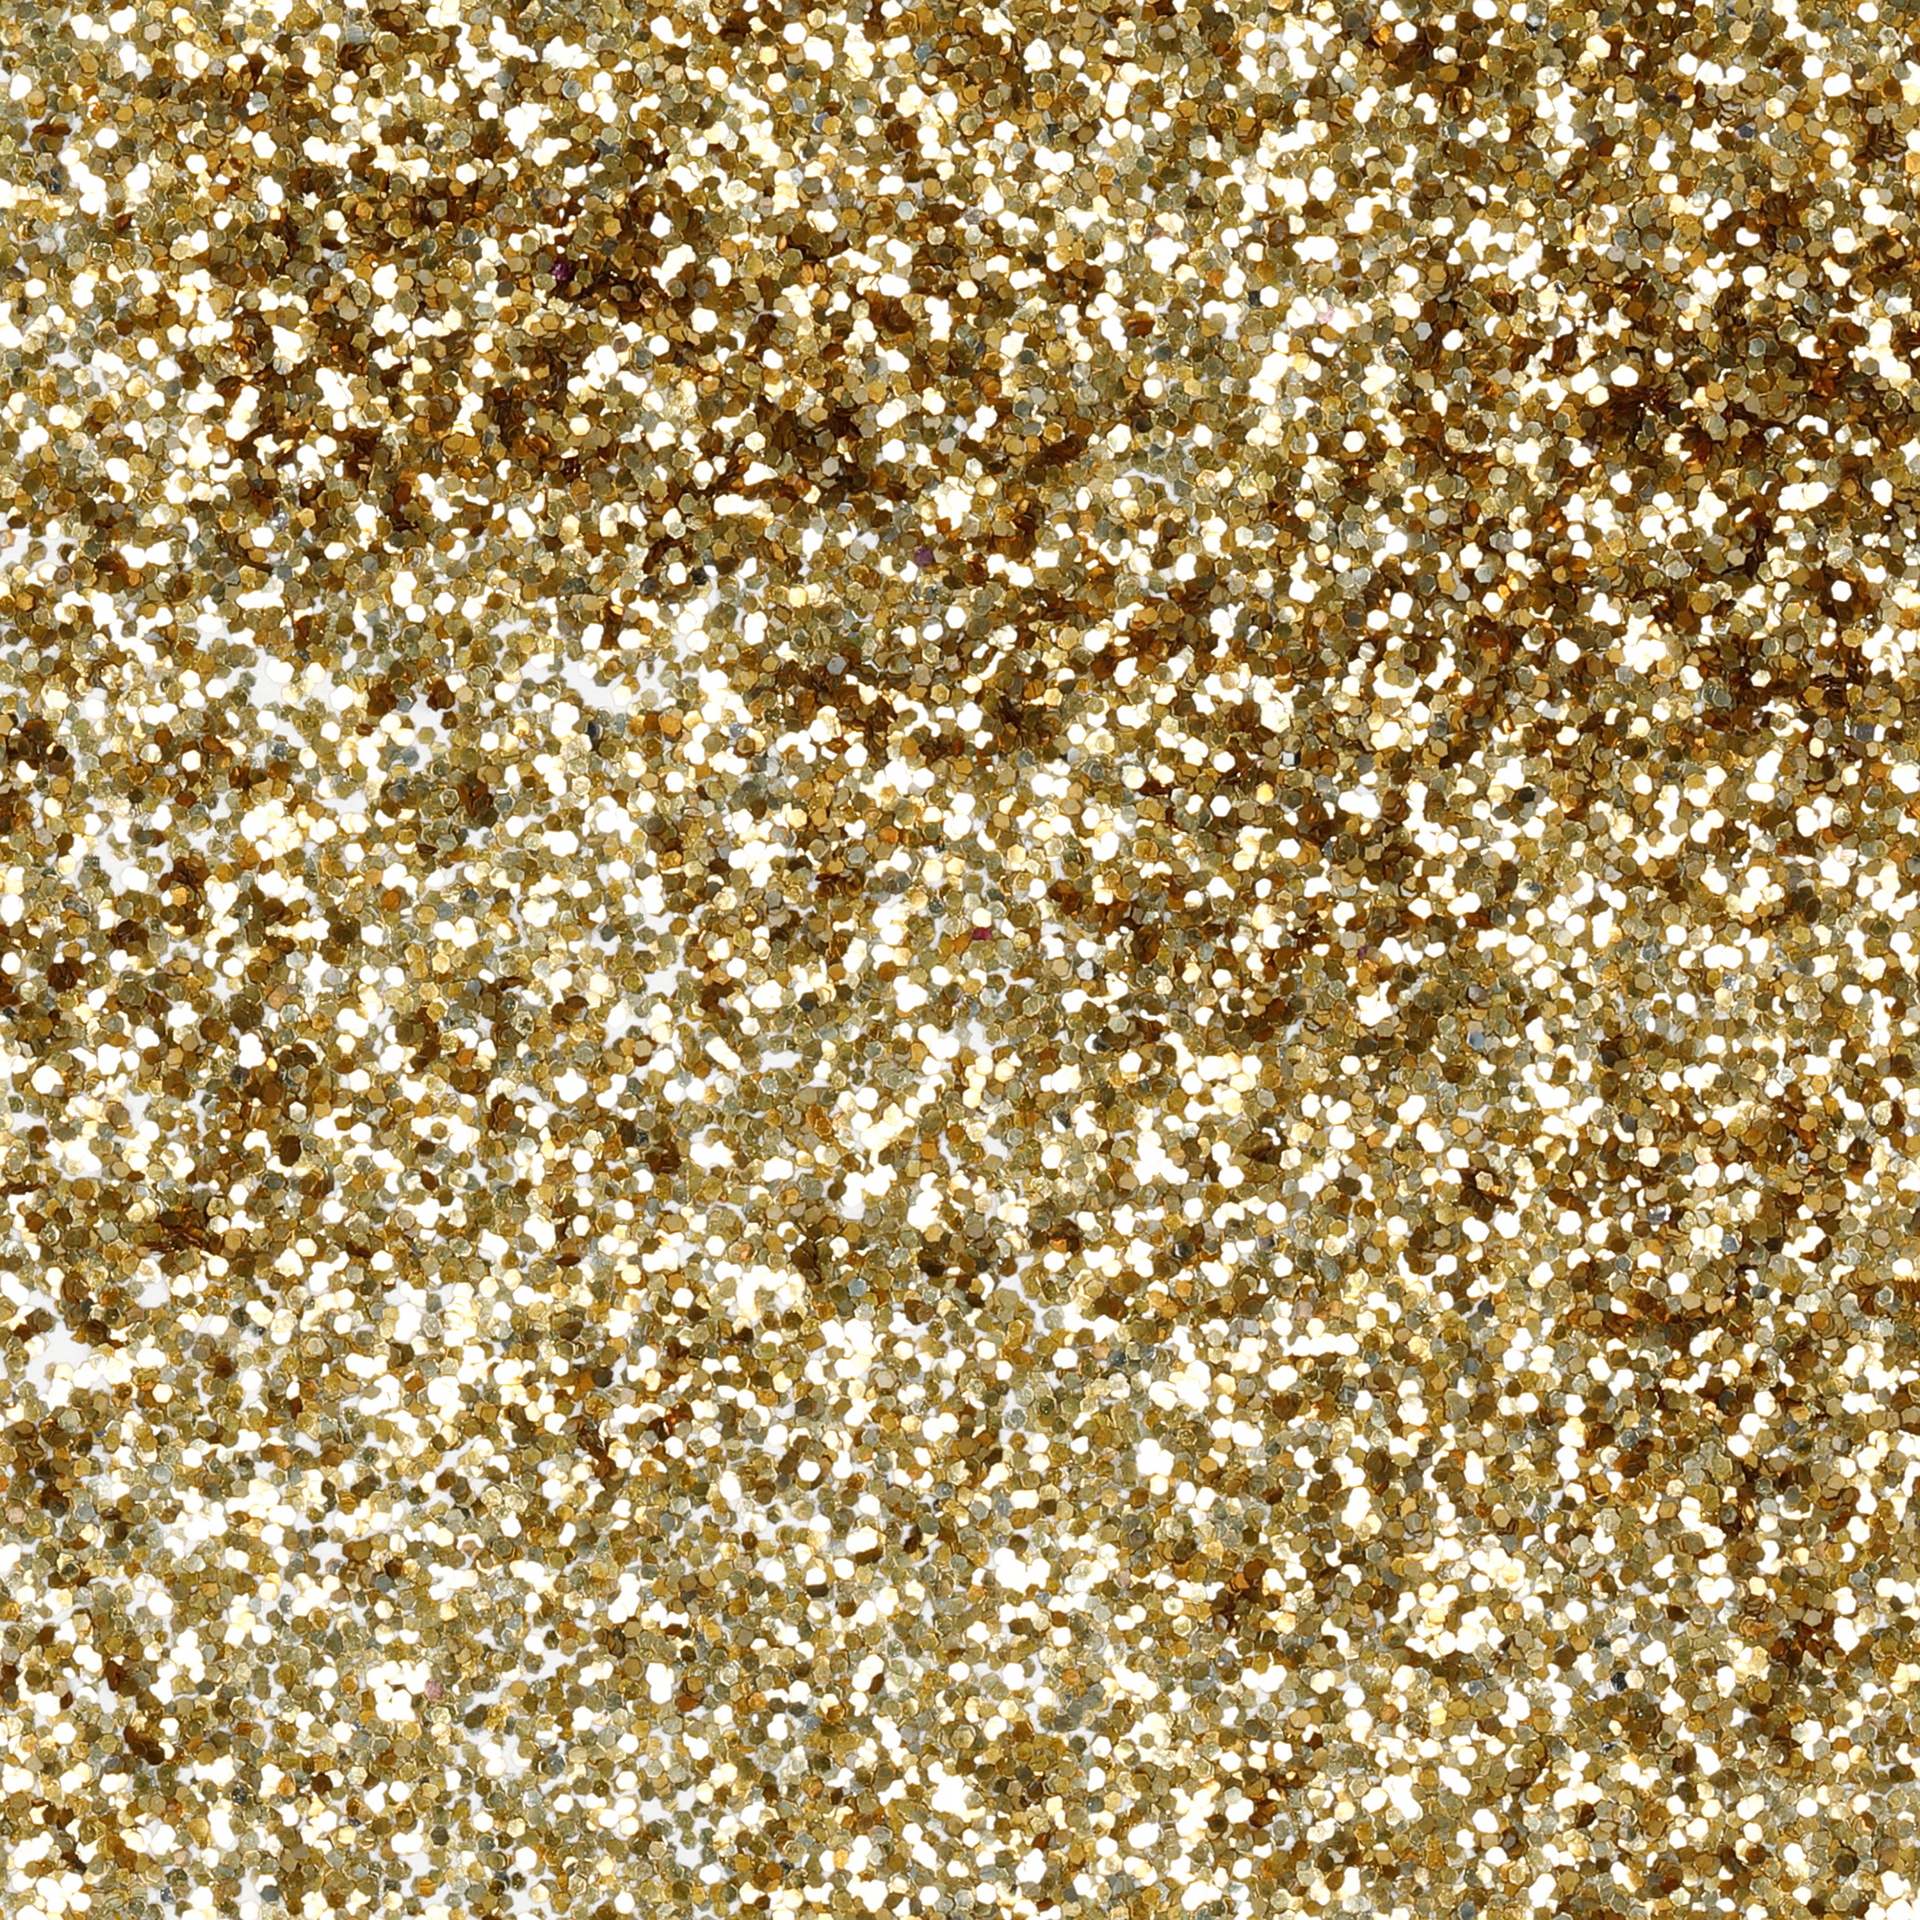 [8310307] Glitter ekologiskt 10g guld